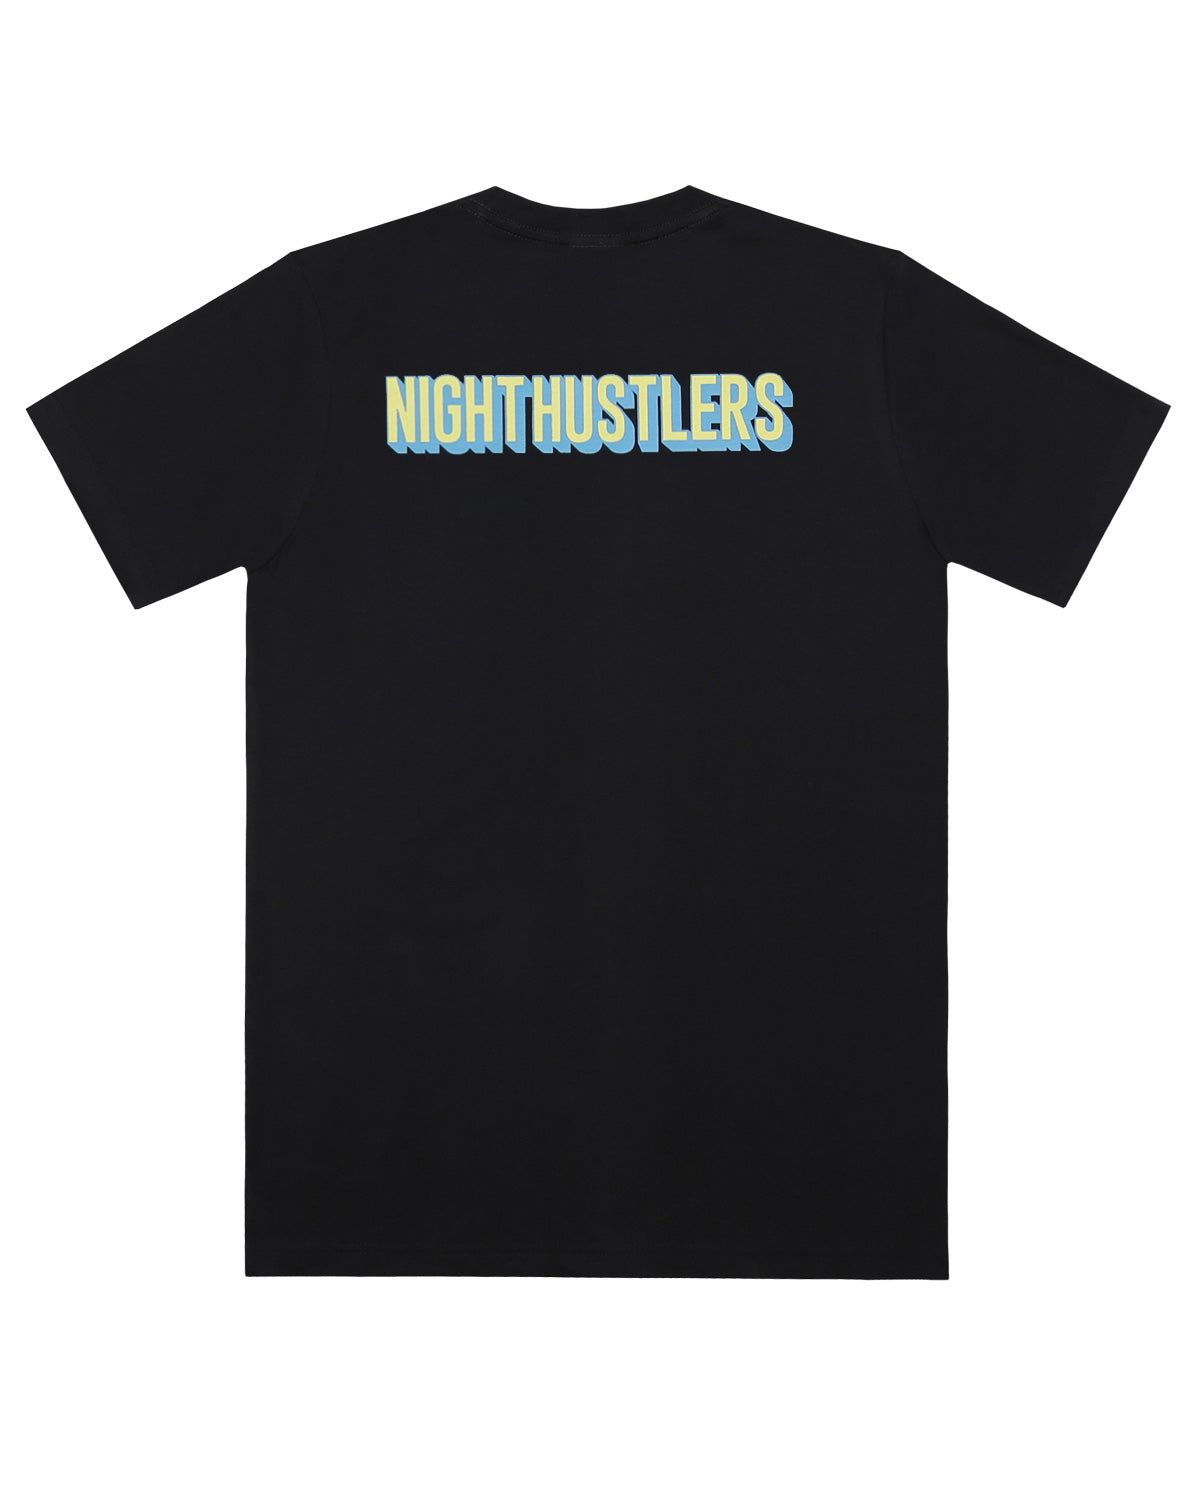 Wadezig! T-Shirt - Hustlers Black